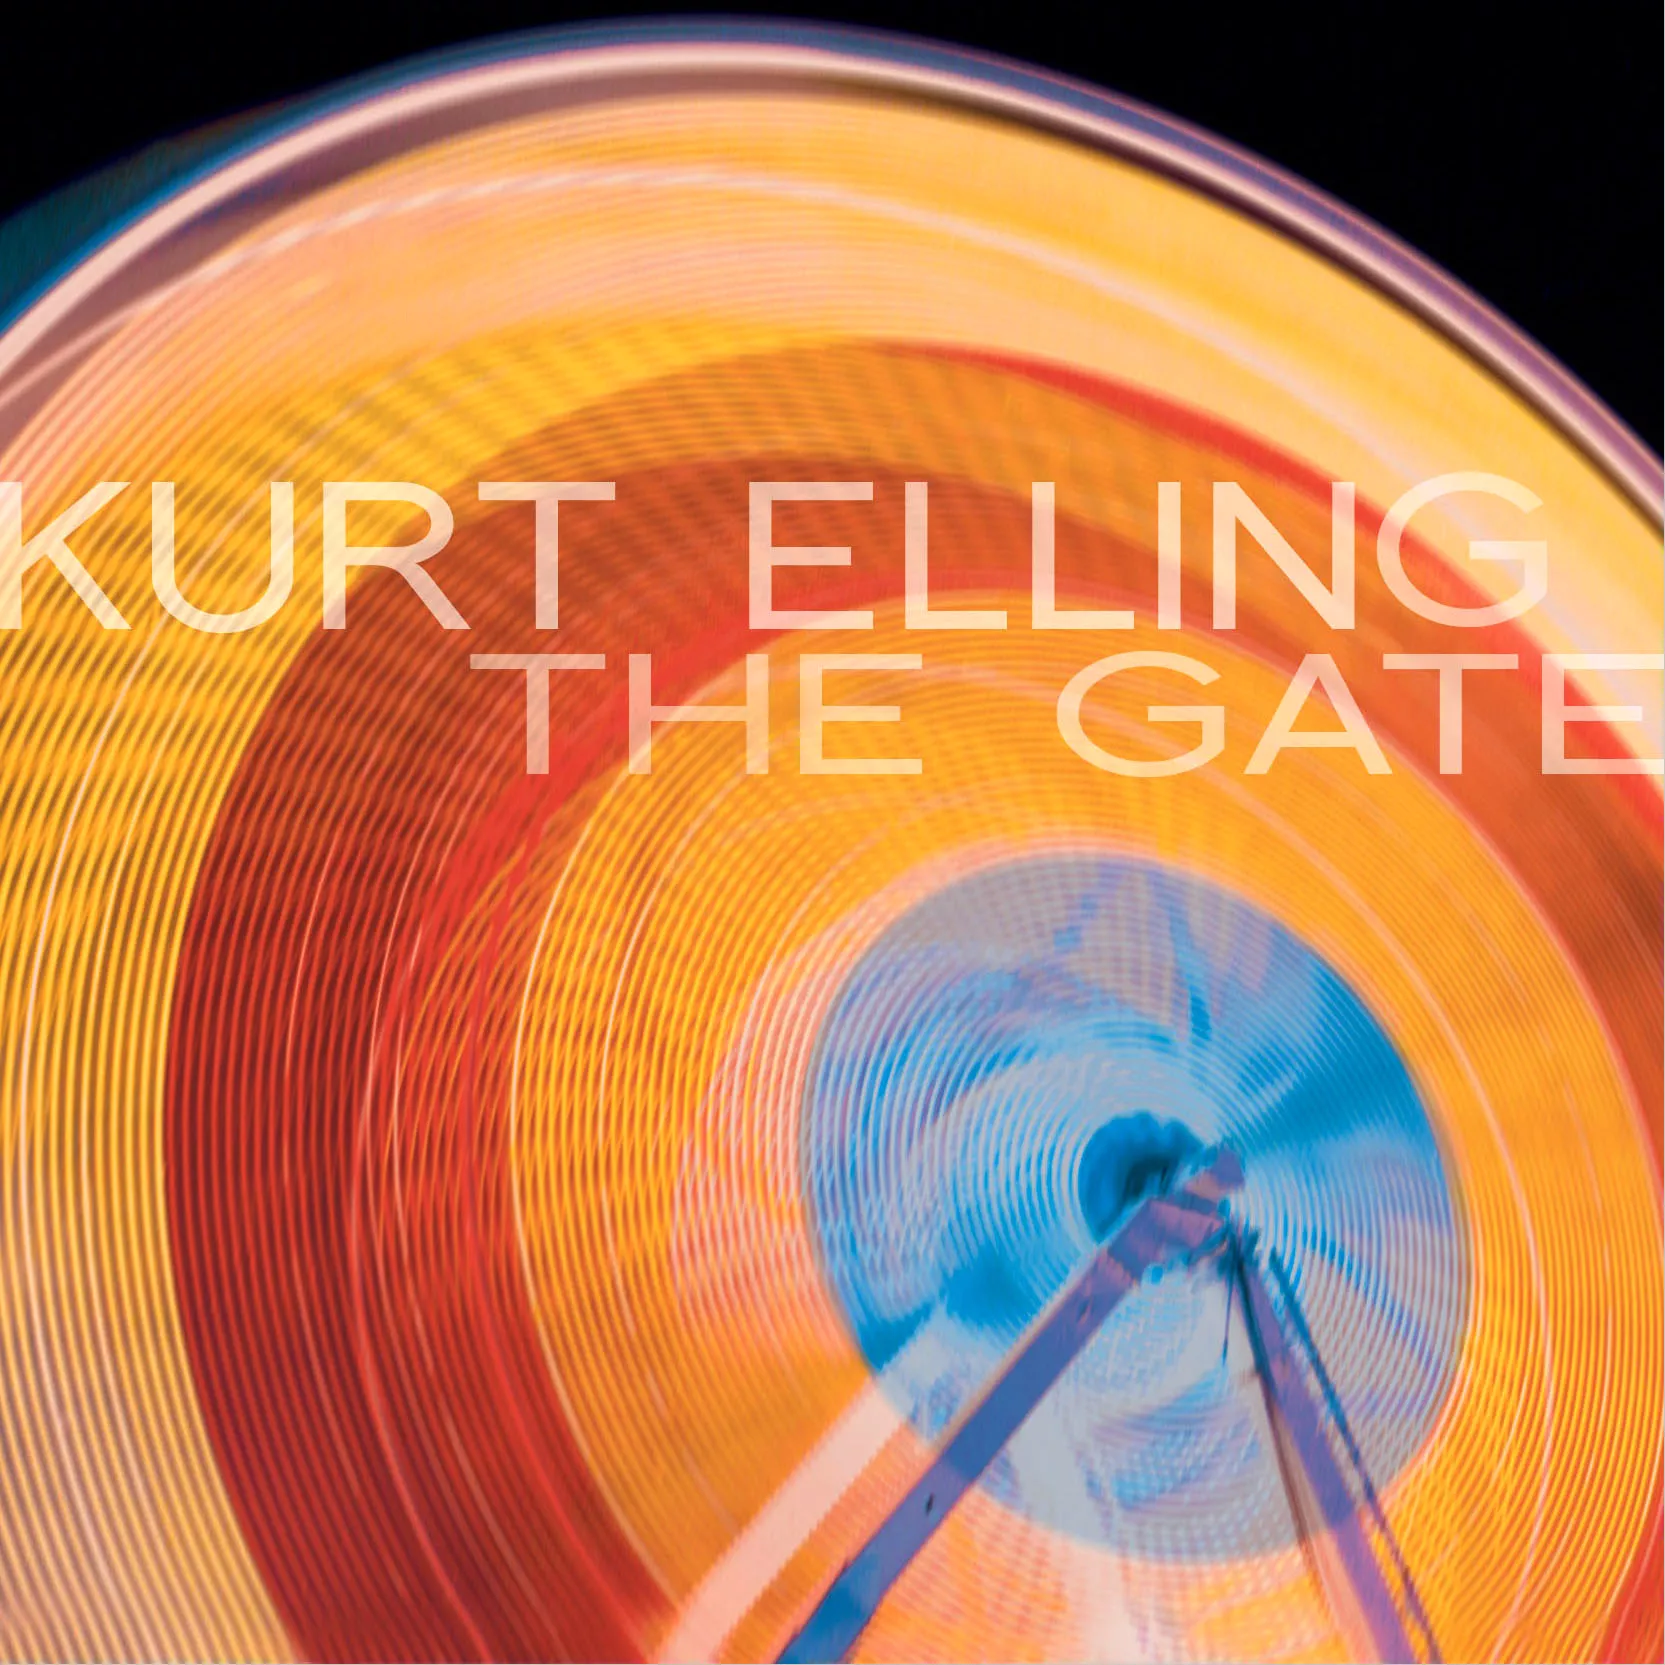 The Gate - Kurt Elling